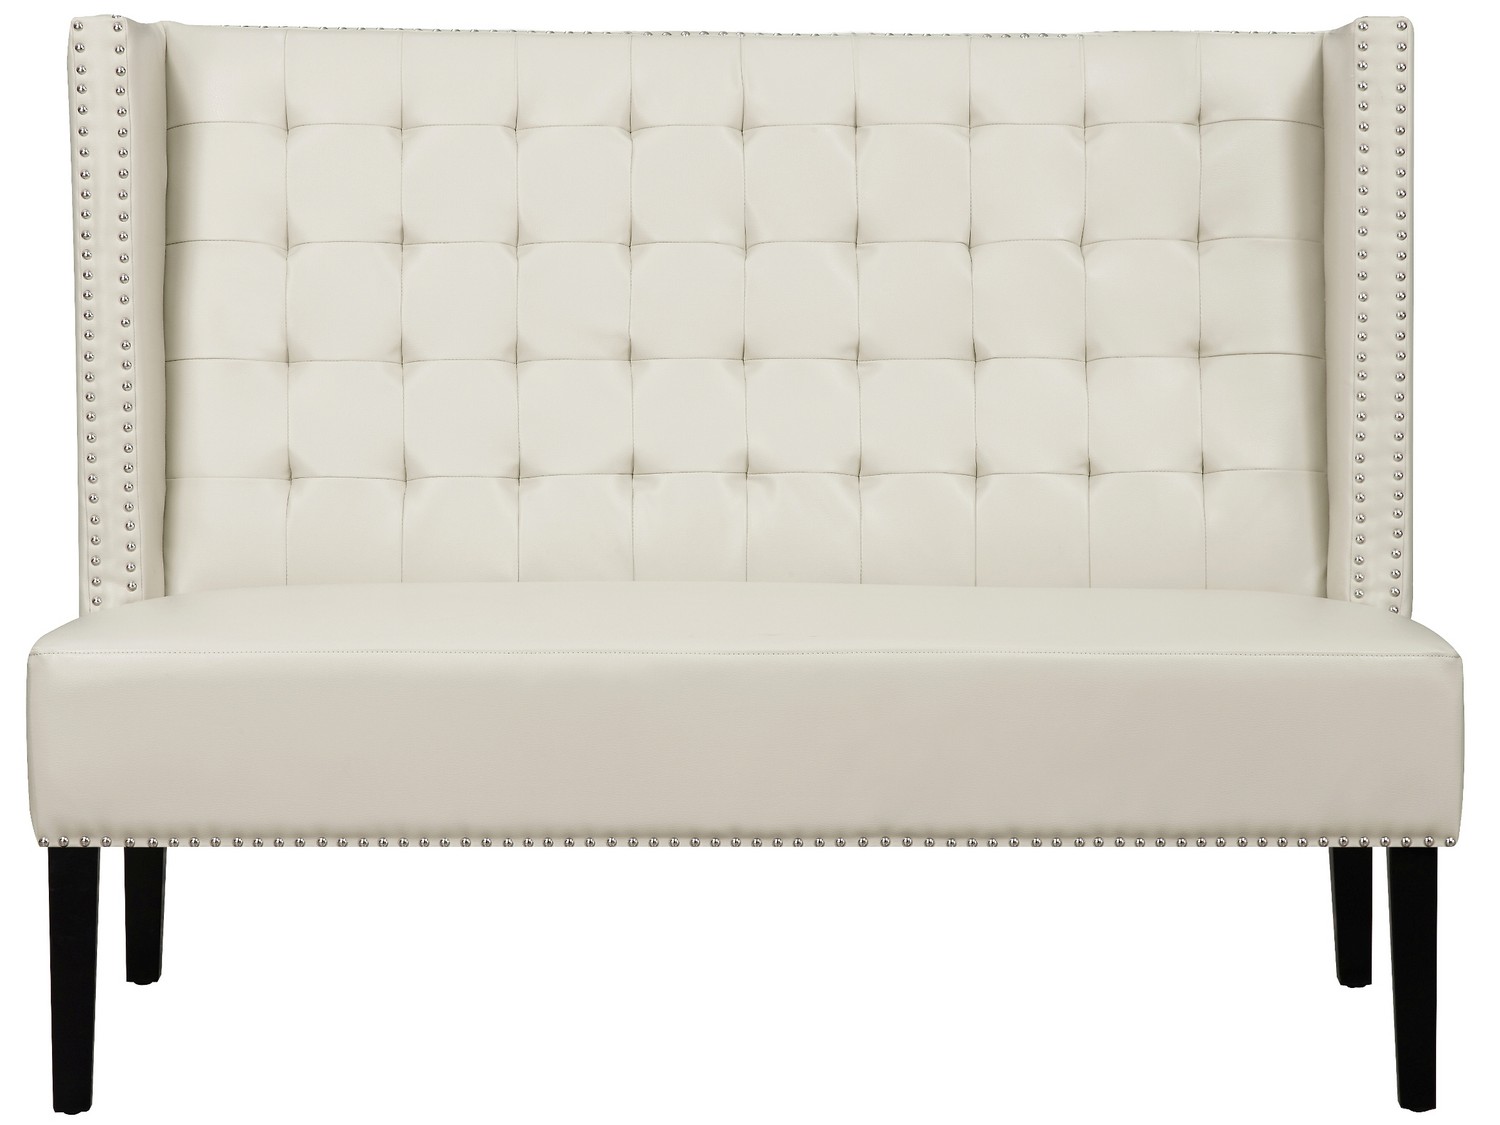 TOV Furniture Halifax Cream Leather Banquette Bench